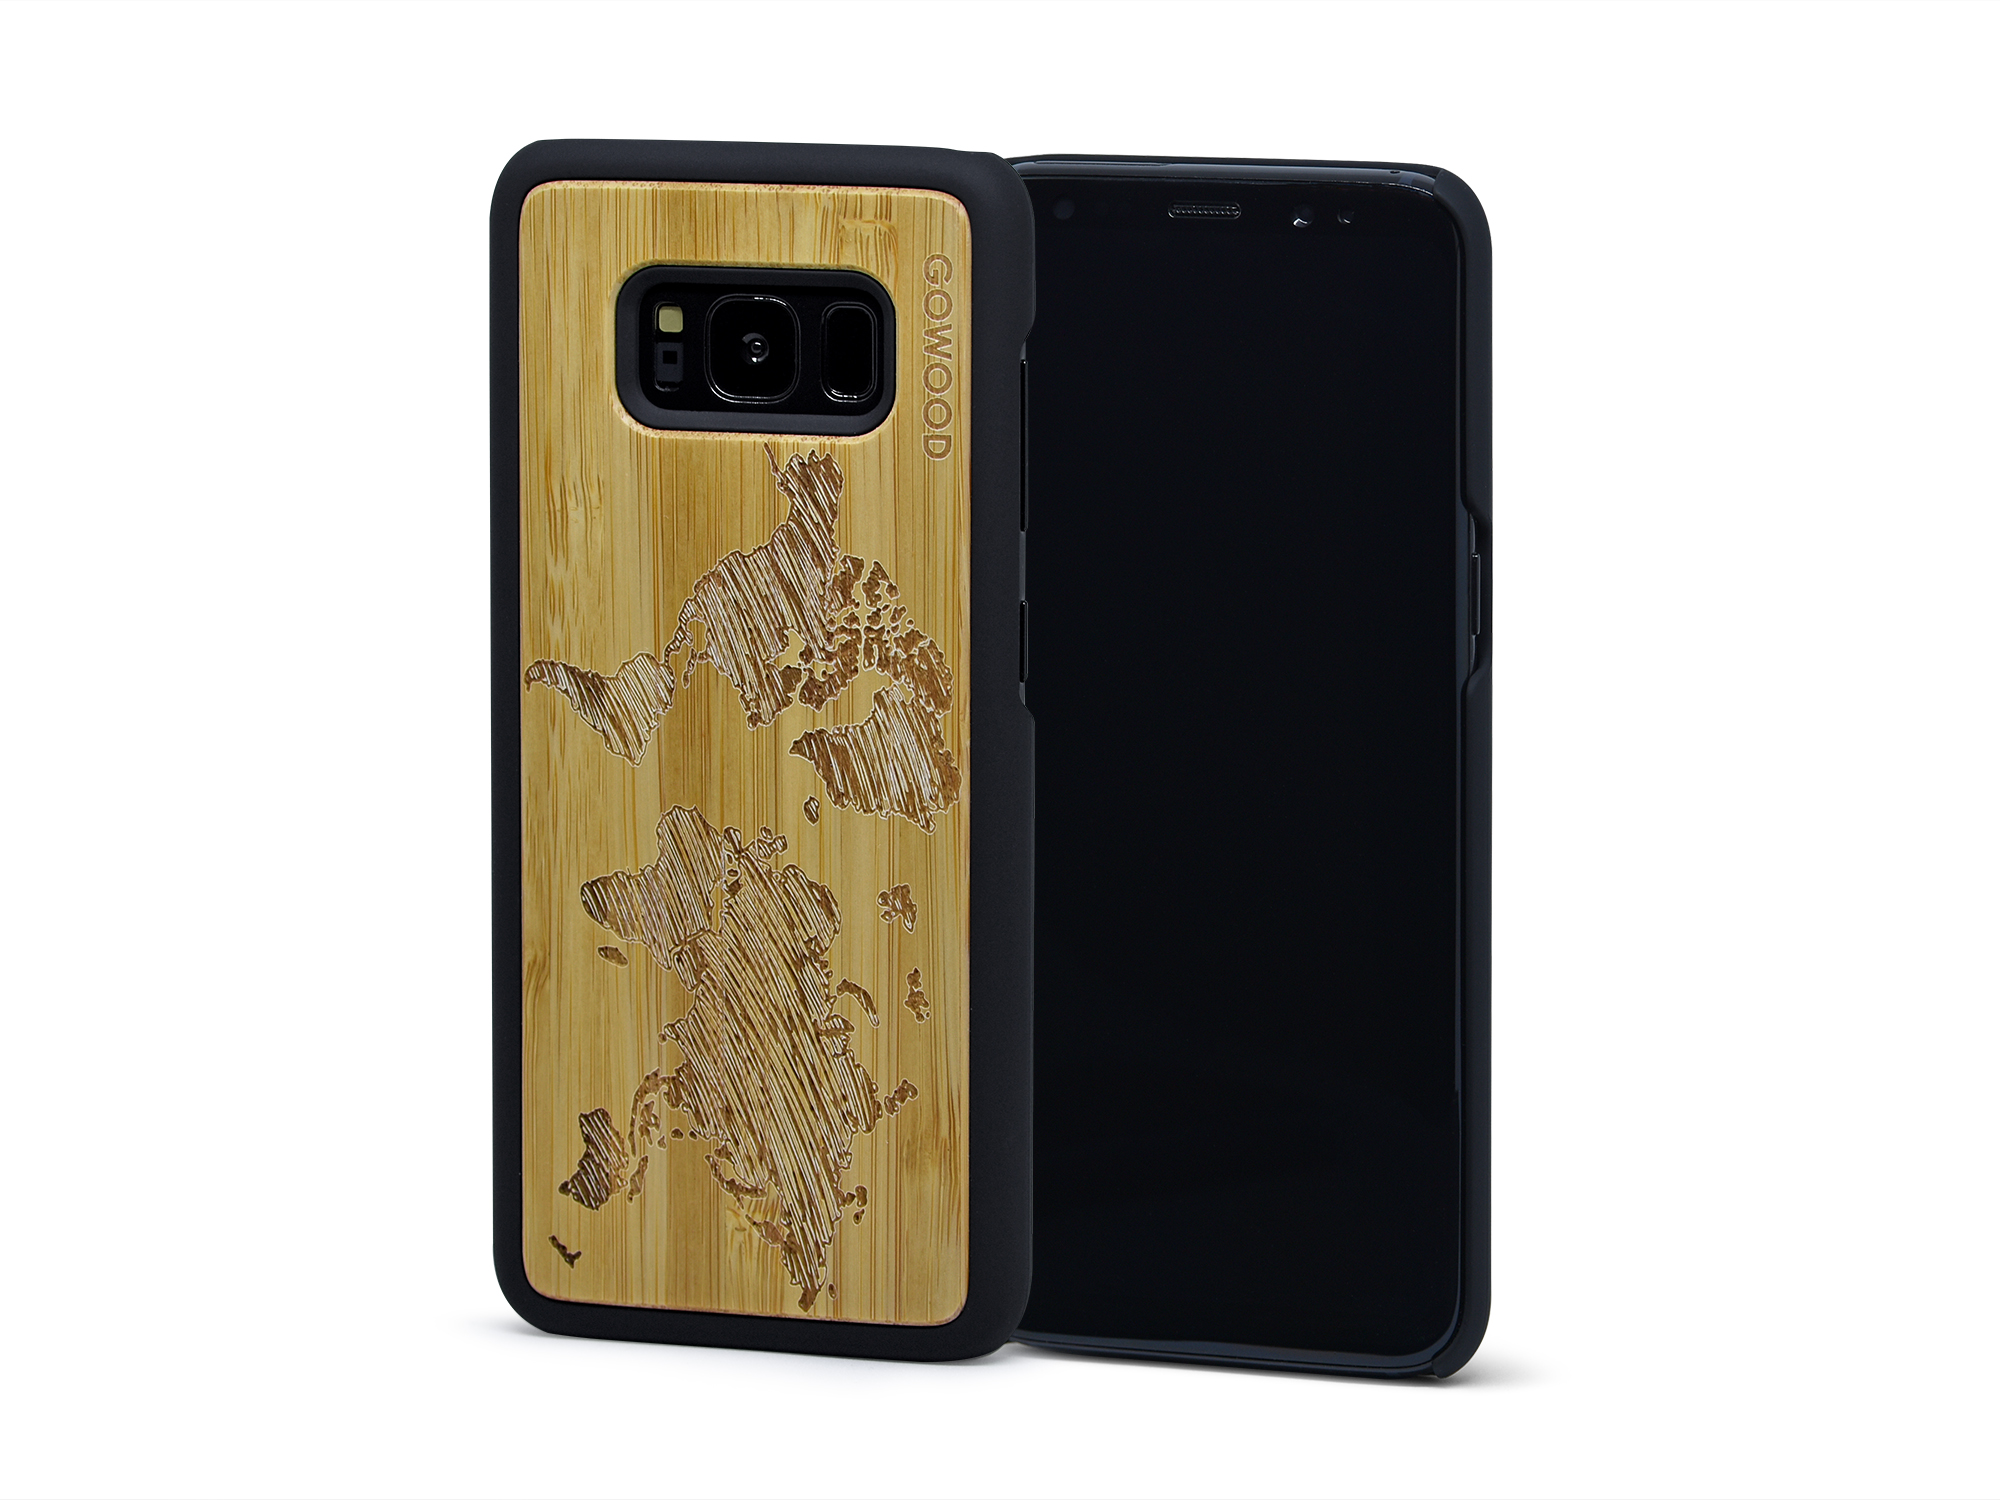 Samsung Galaxy S8 wood case